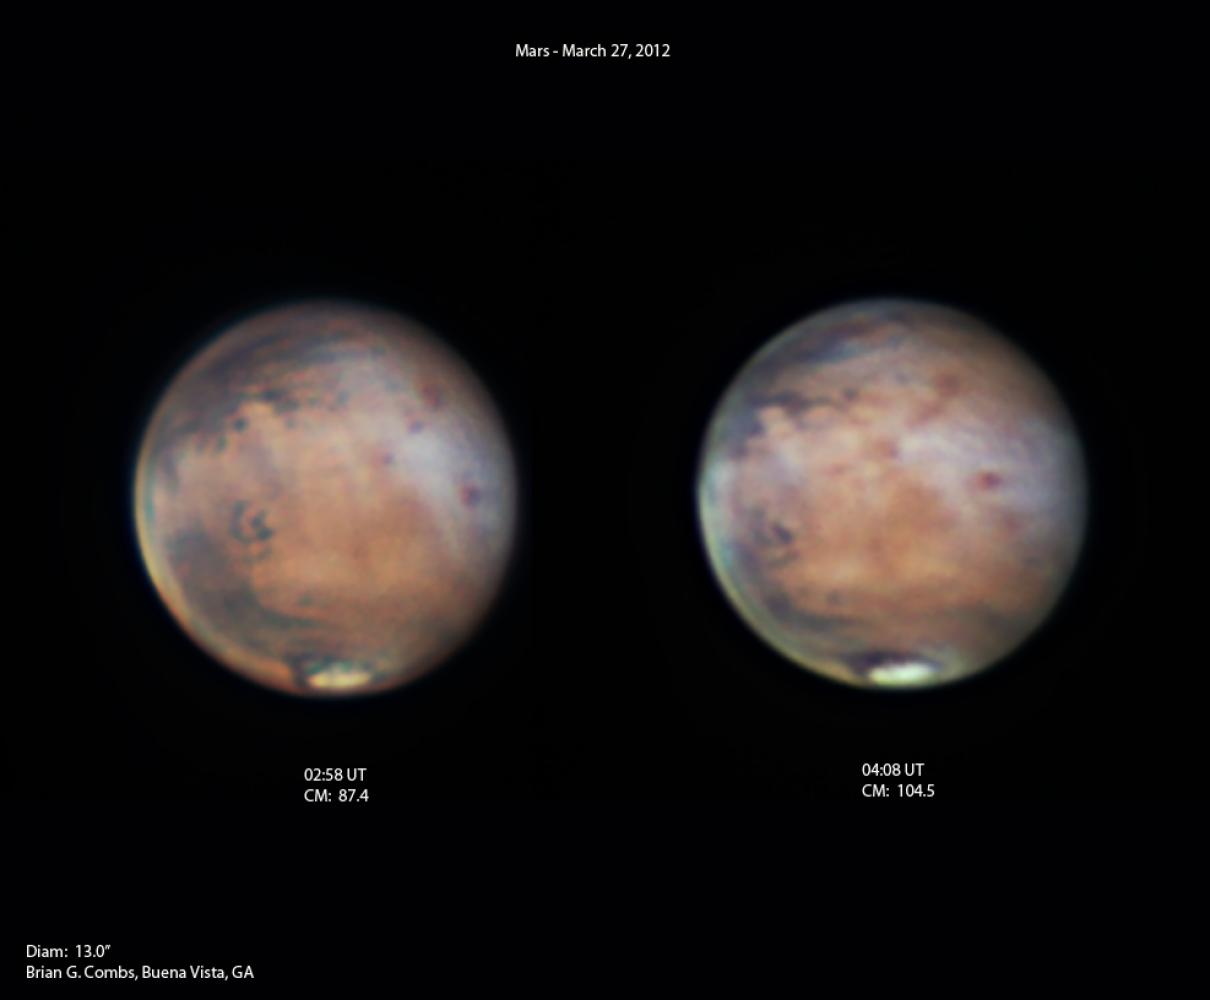 Mars - March 27, 2012